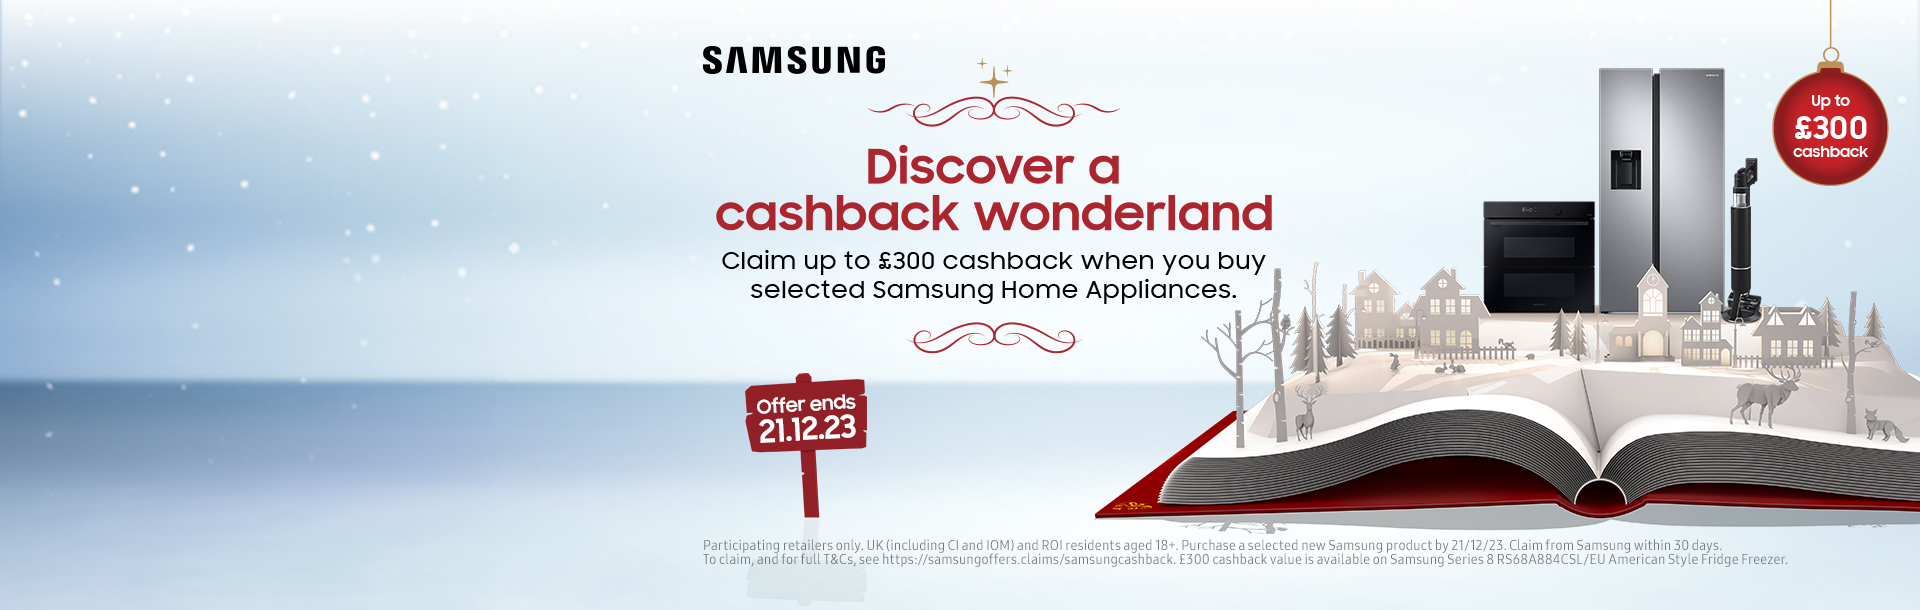 Samsung Christmas Cashback